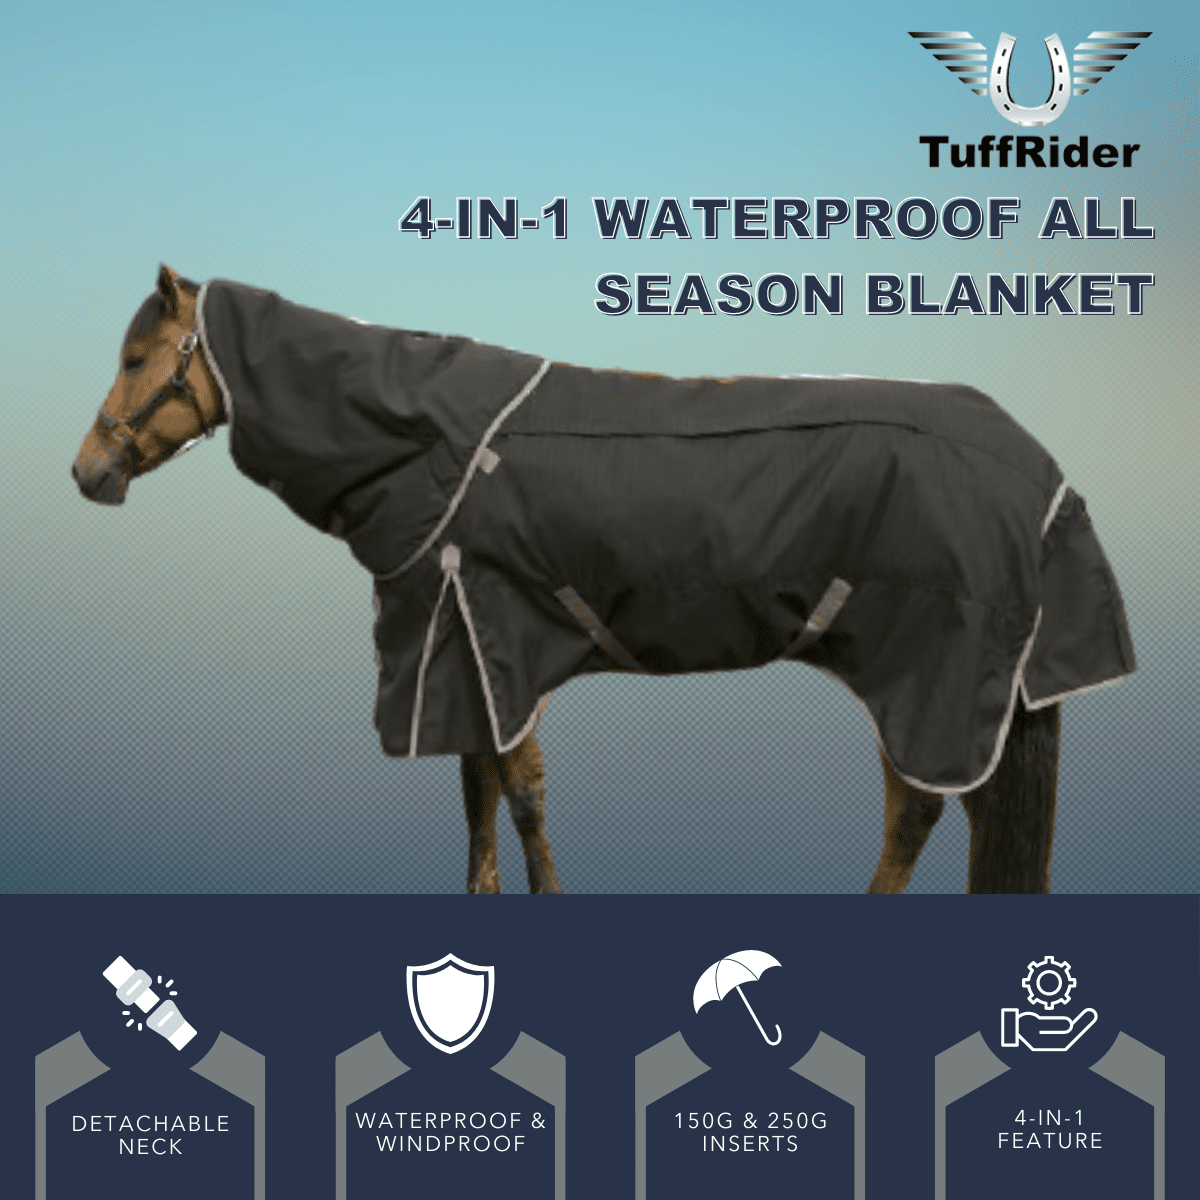 Tuffrider 4-in-1 waterproof all season blanket